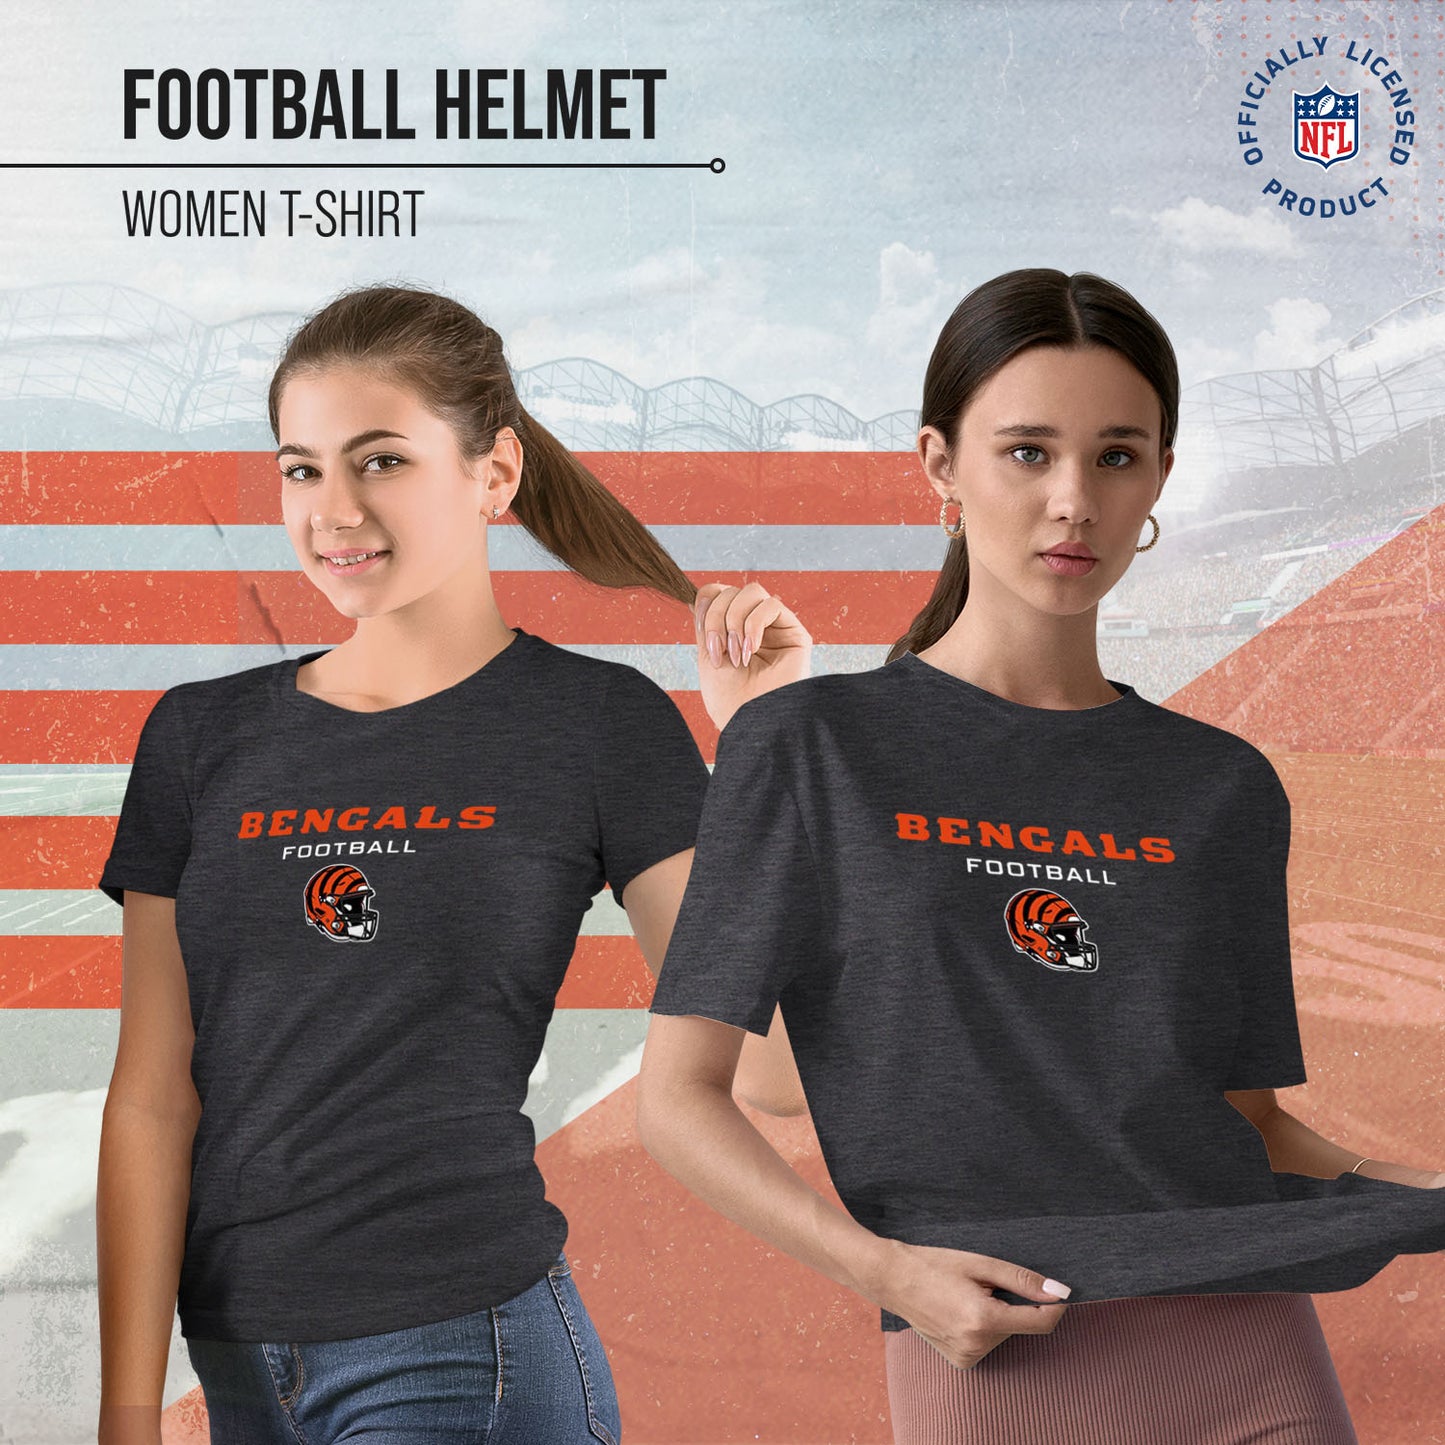 Cincinnati Bengals Women's NFL Football Helmet Short Sleeve Tagless T-Shirt - Charcoal